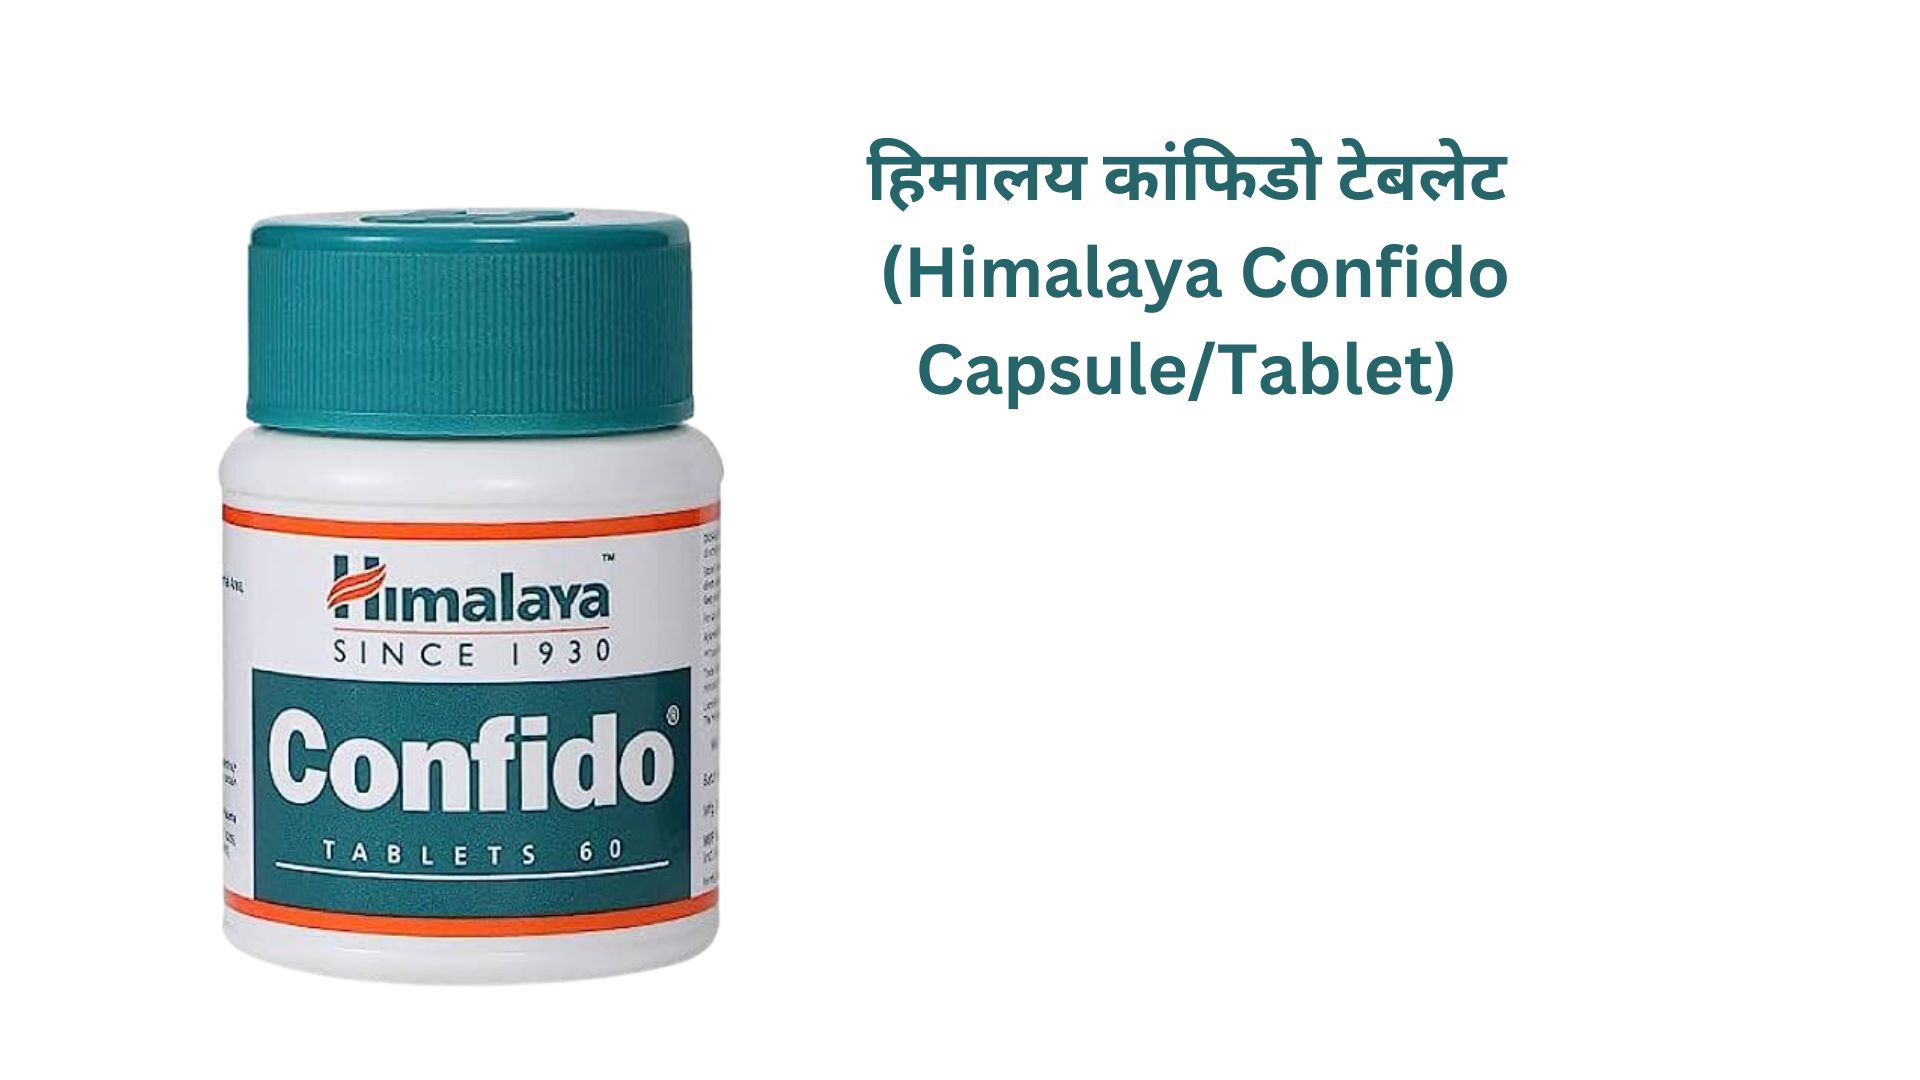 हिमालय कांफिडो टेबलेट (Himalaya Confido Capsule/Tablet) 